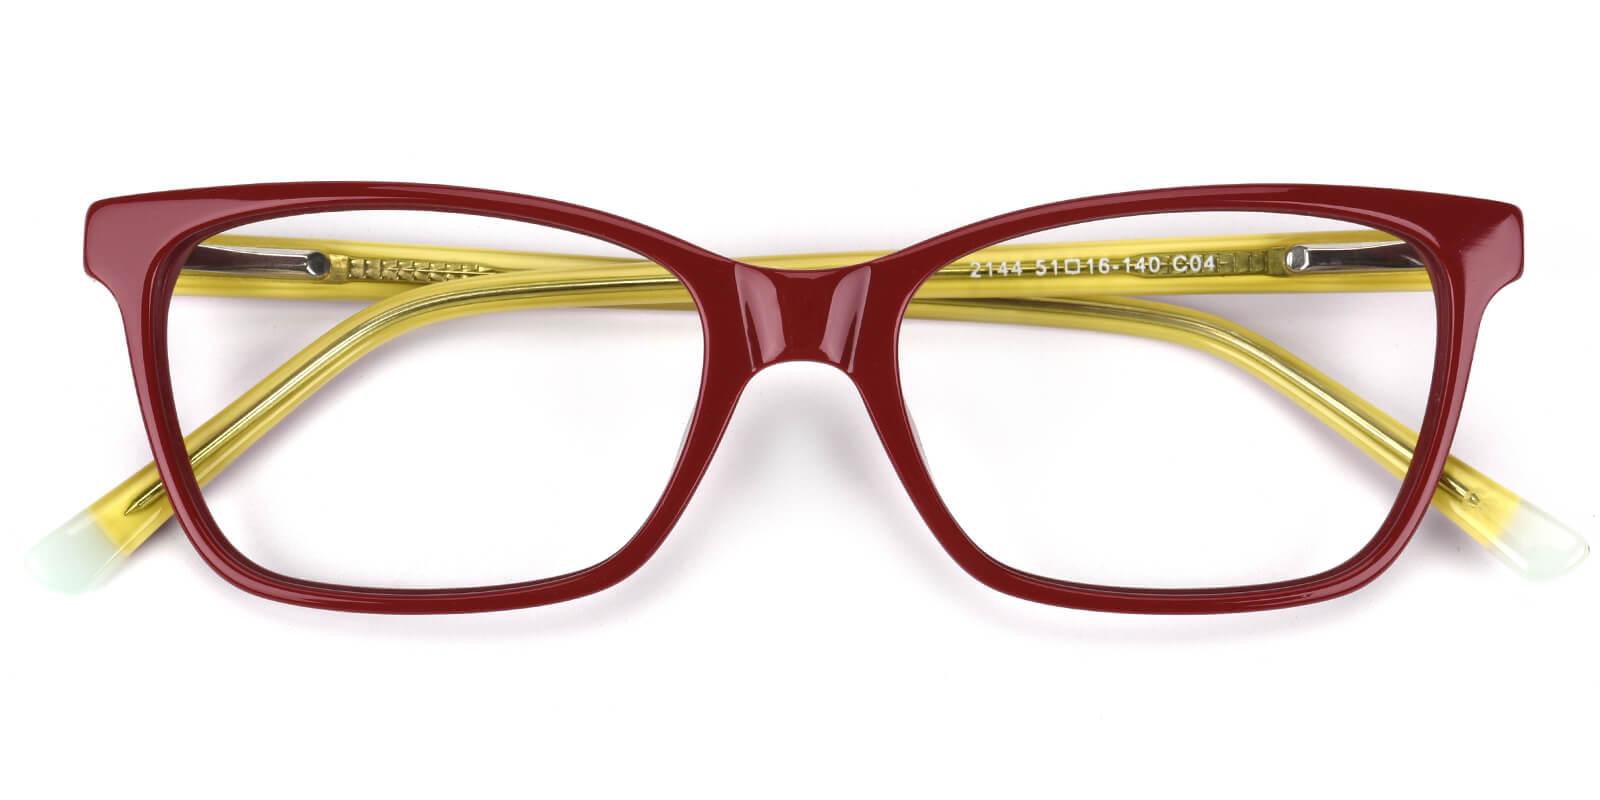 Waferay-Yellow-Rectangle-Acetate-Eyeglasses-detail